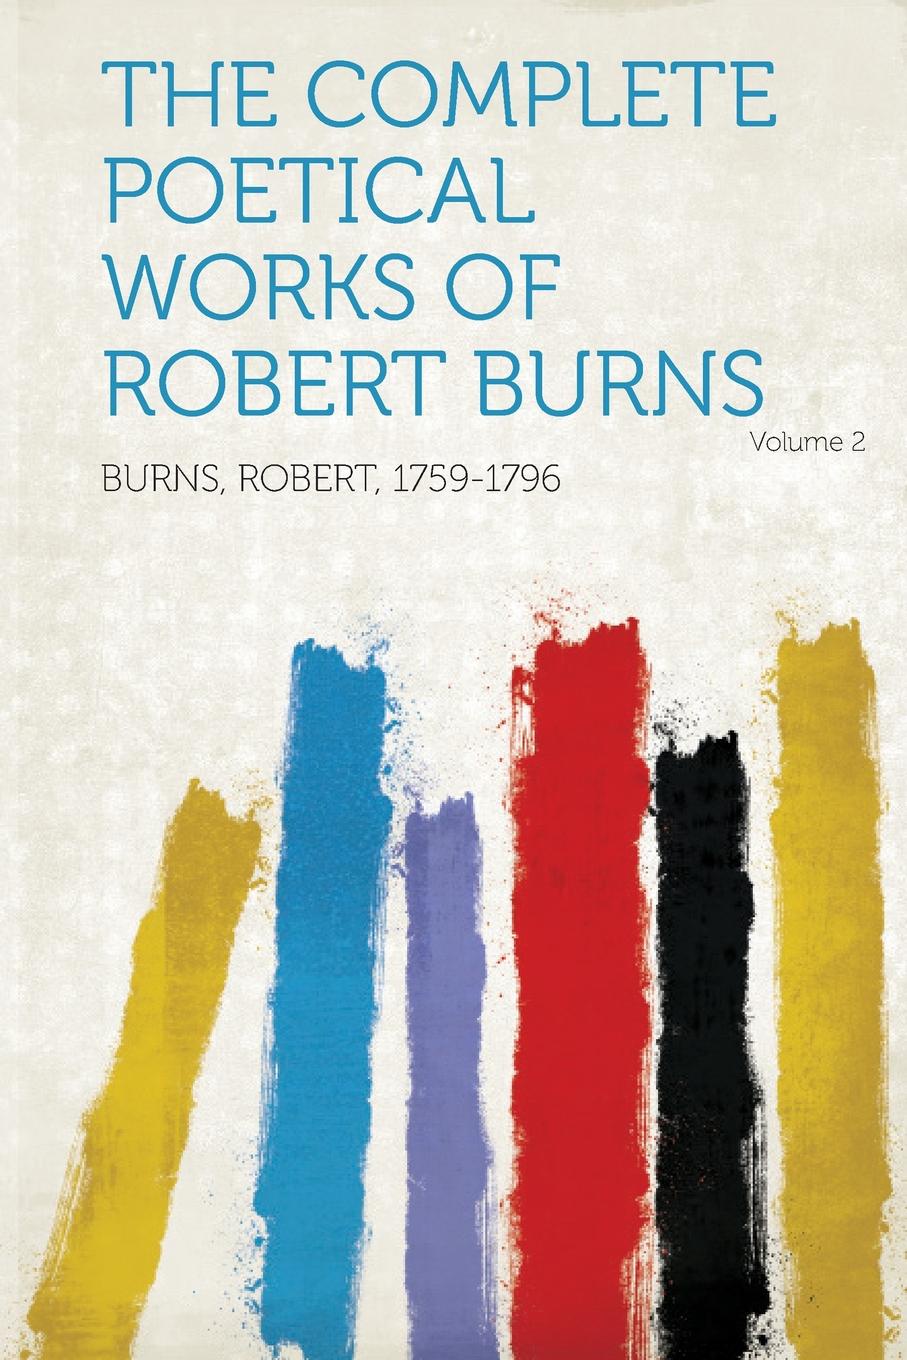 The Complete Poetical Works of Robert Burns Volume 2